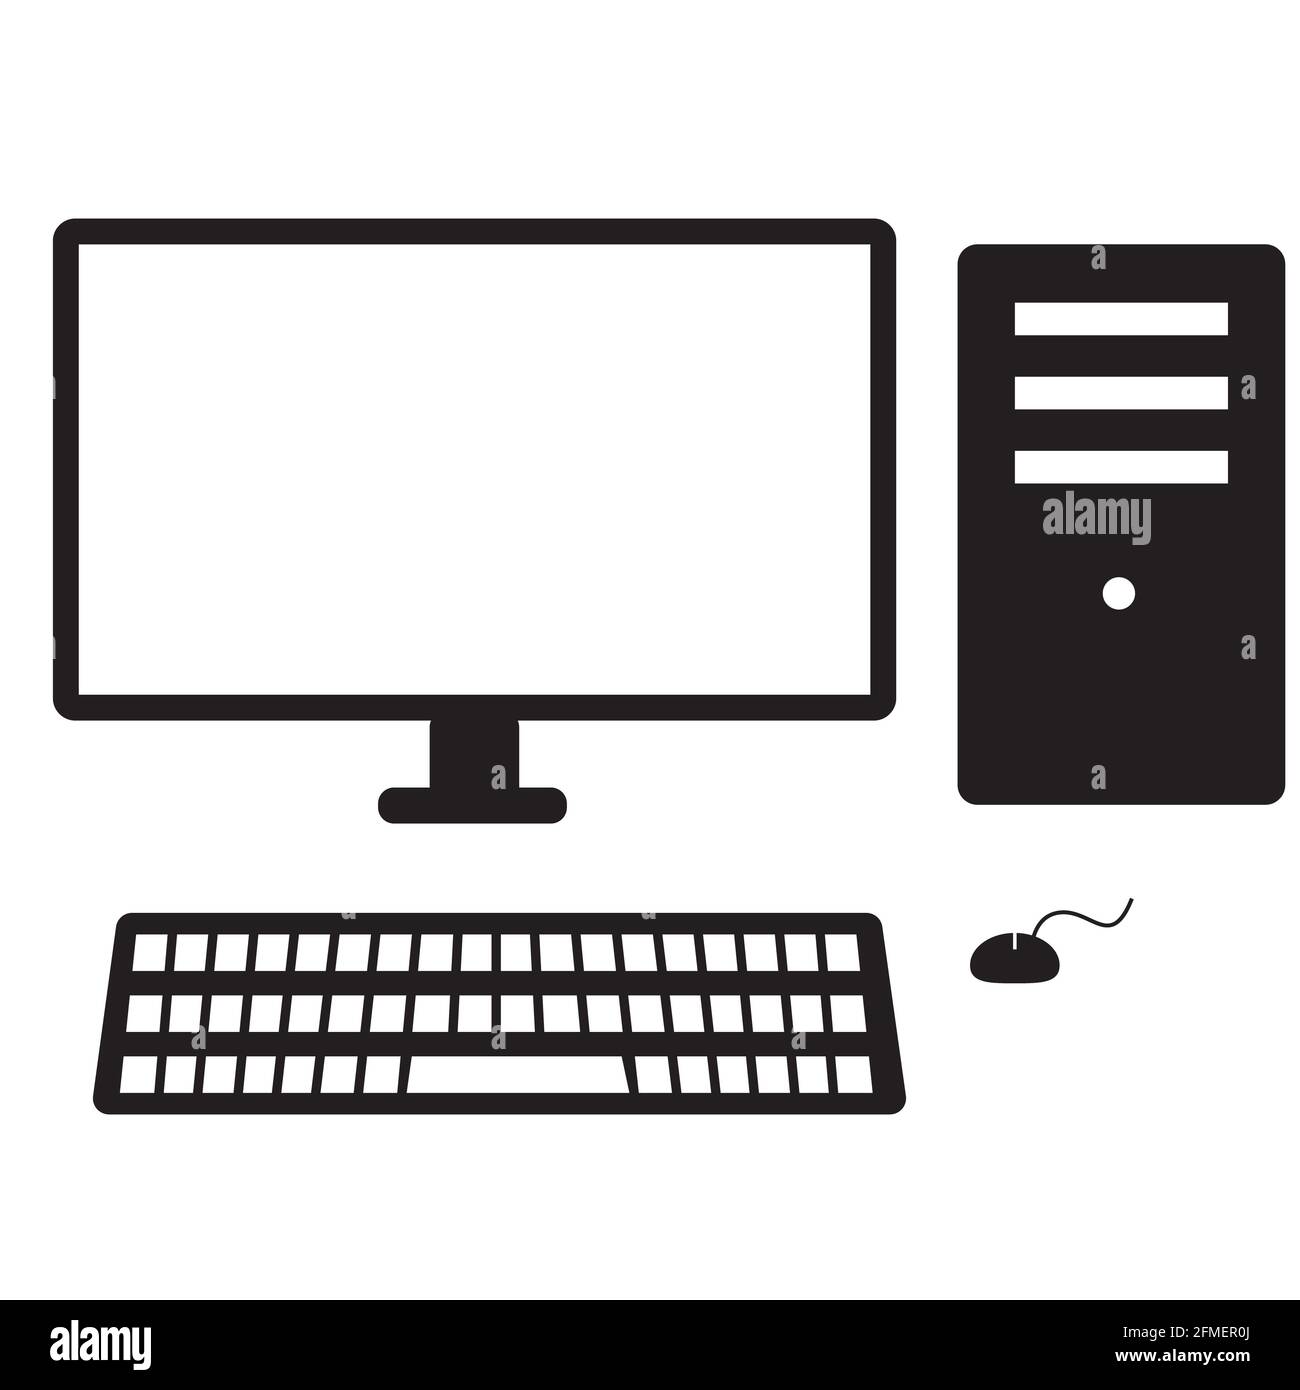 desktop computer icon on white background. computer sign. pc symbol. flat  style Stock Photo - Alamy